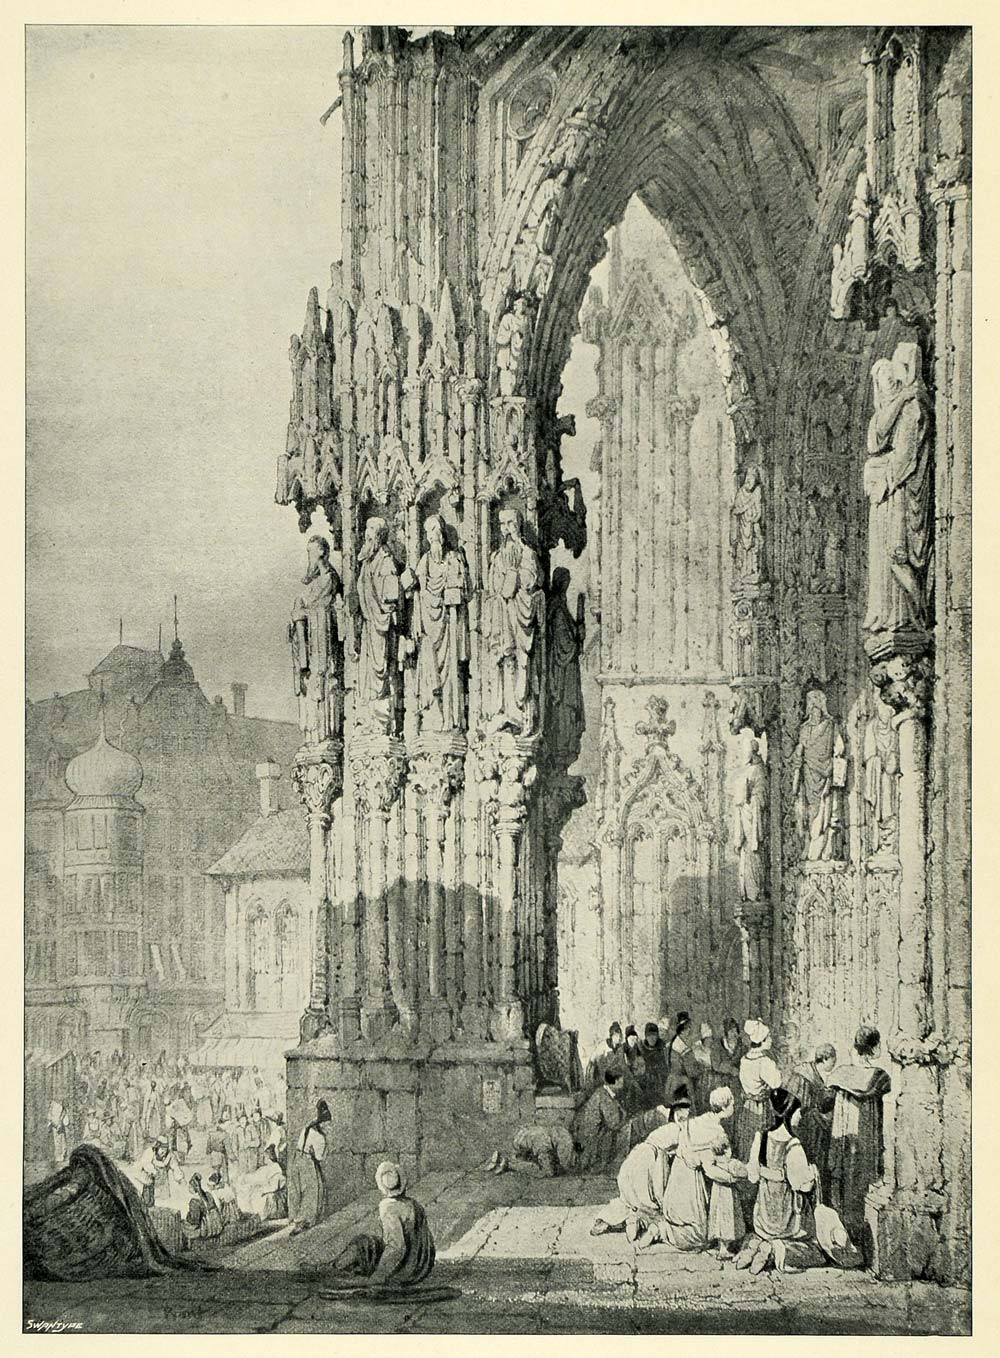 1897 Print Porch Ratisbon Cathedral Facade Church Gothic Germany Samuel XAD4